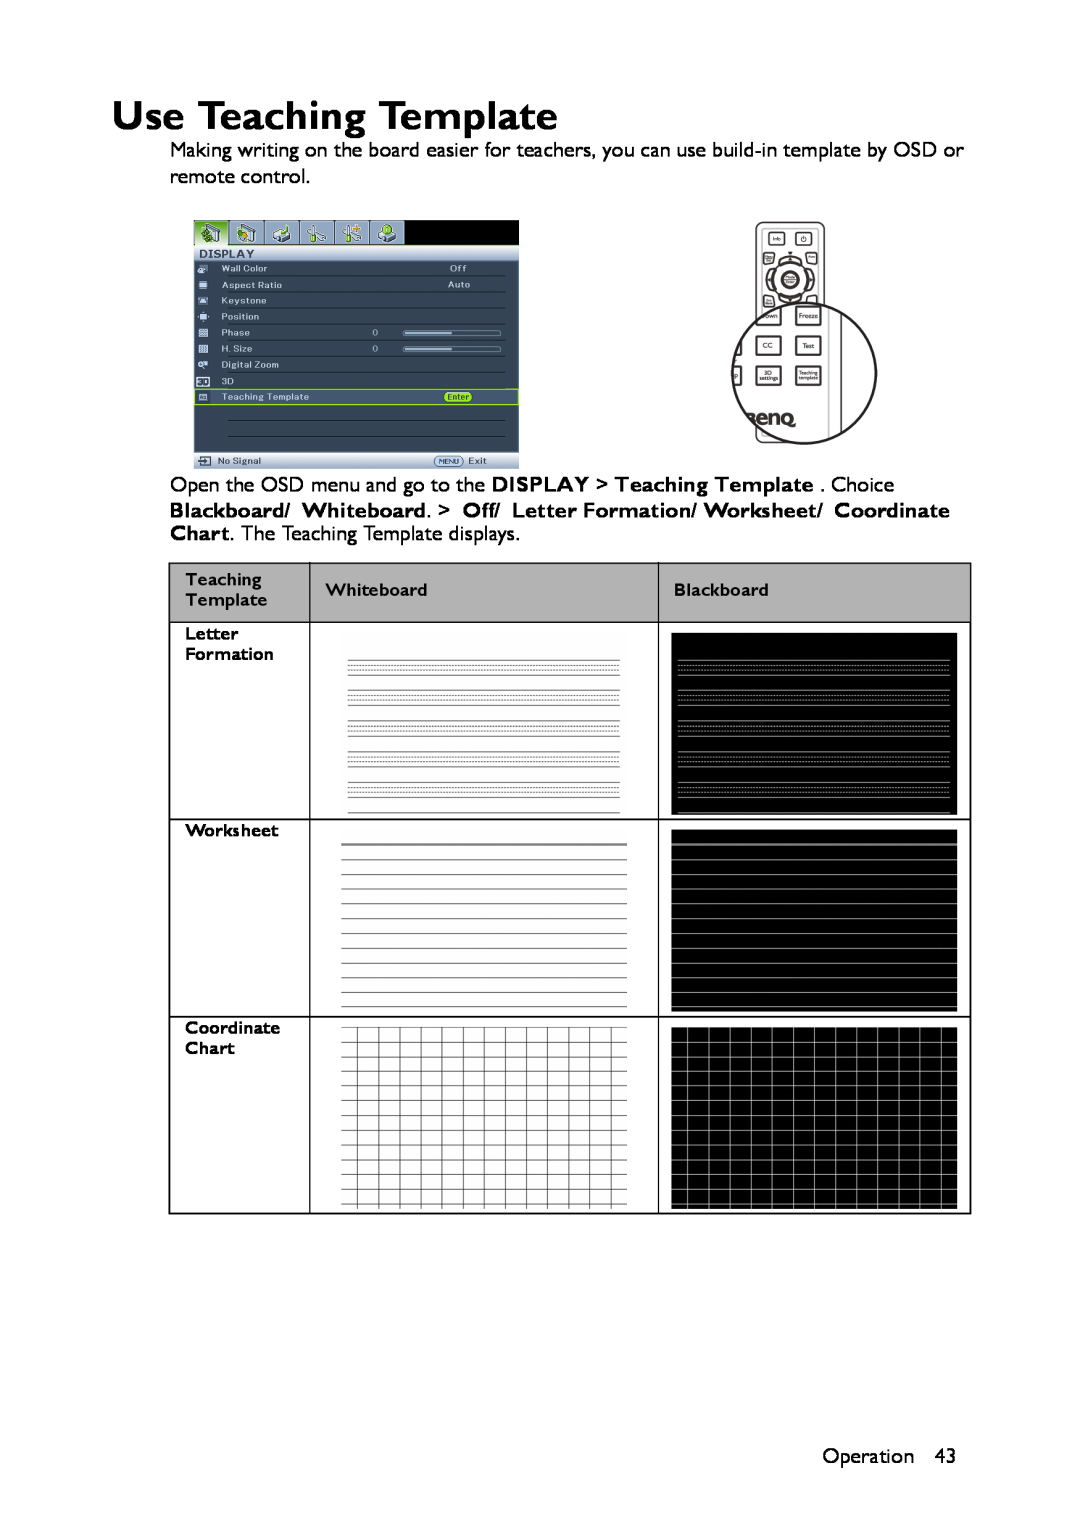 BenQ MS521 user manual Use Teaching Template, Whiteboard, Blackboard, Letter, Formation, Worksheet Coordinate Chart 